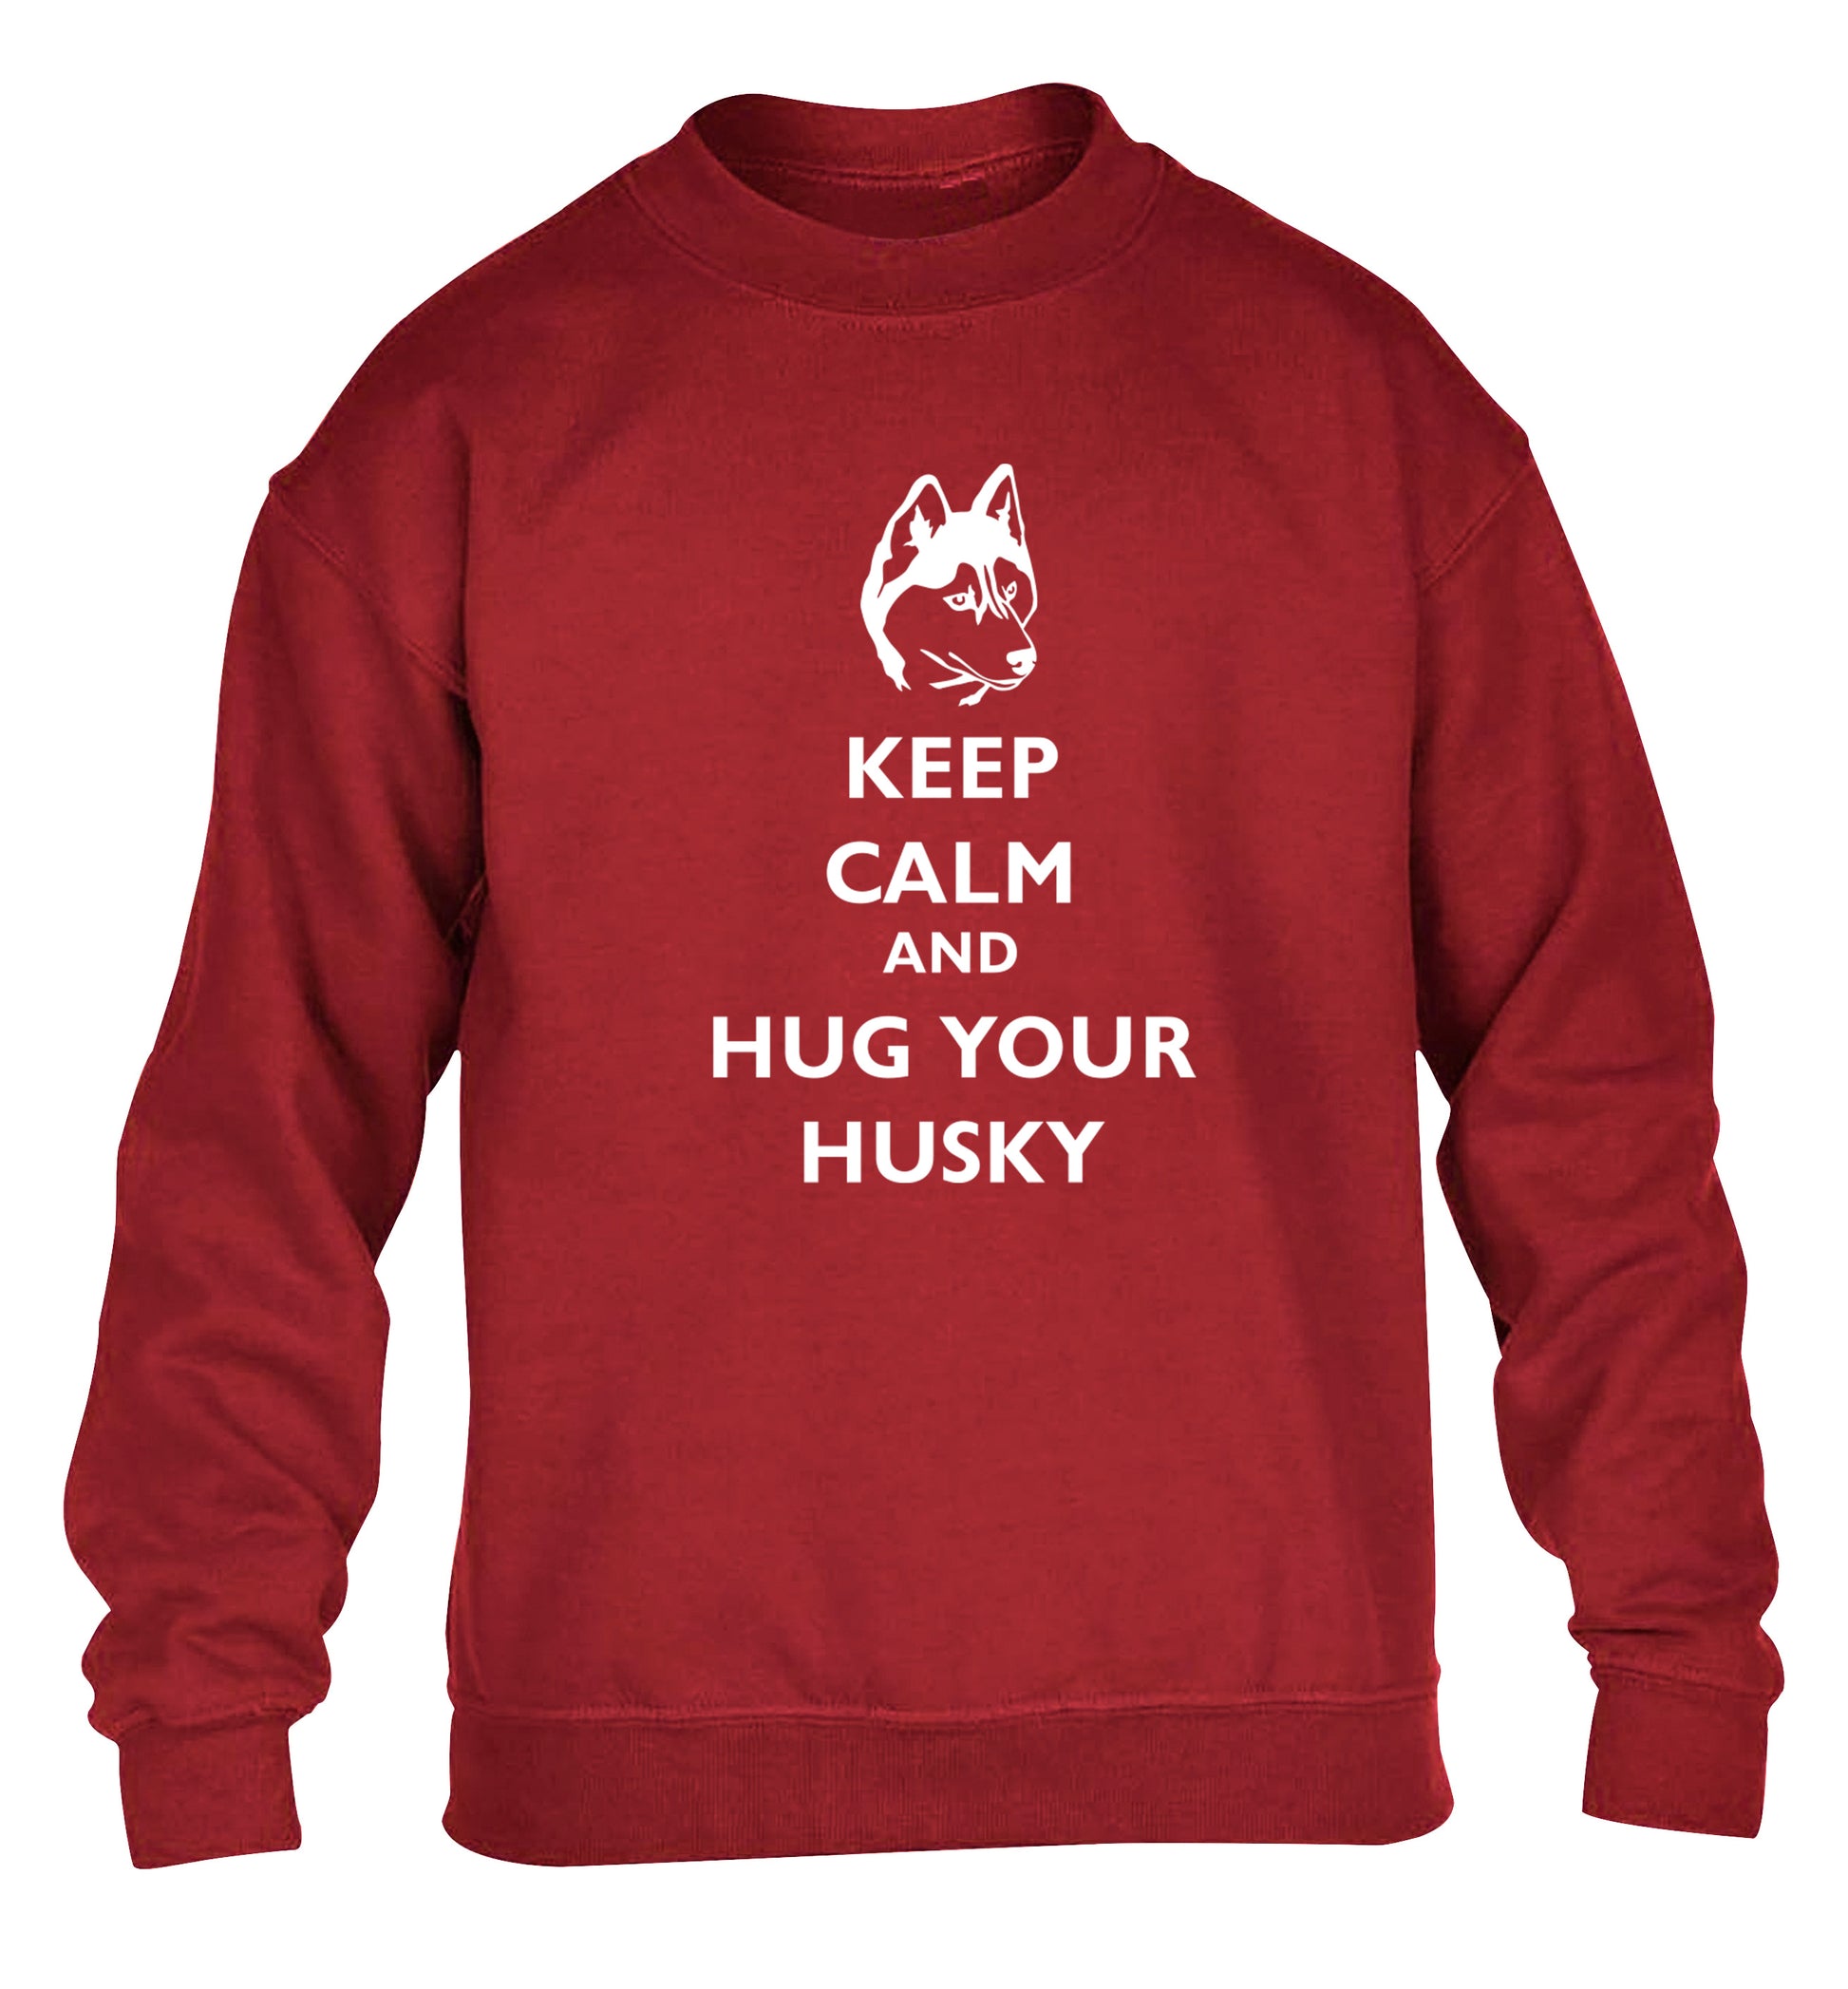 Keep calm and hug your husky children's grey sweater 12-13 Years